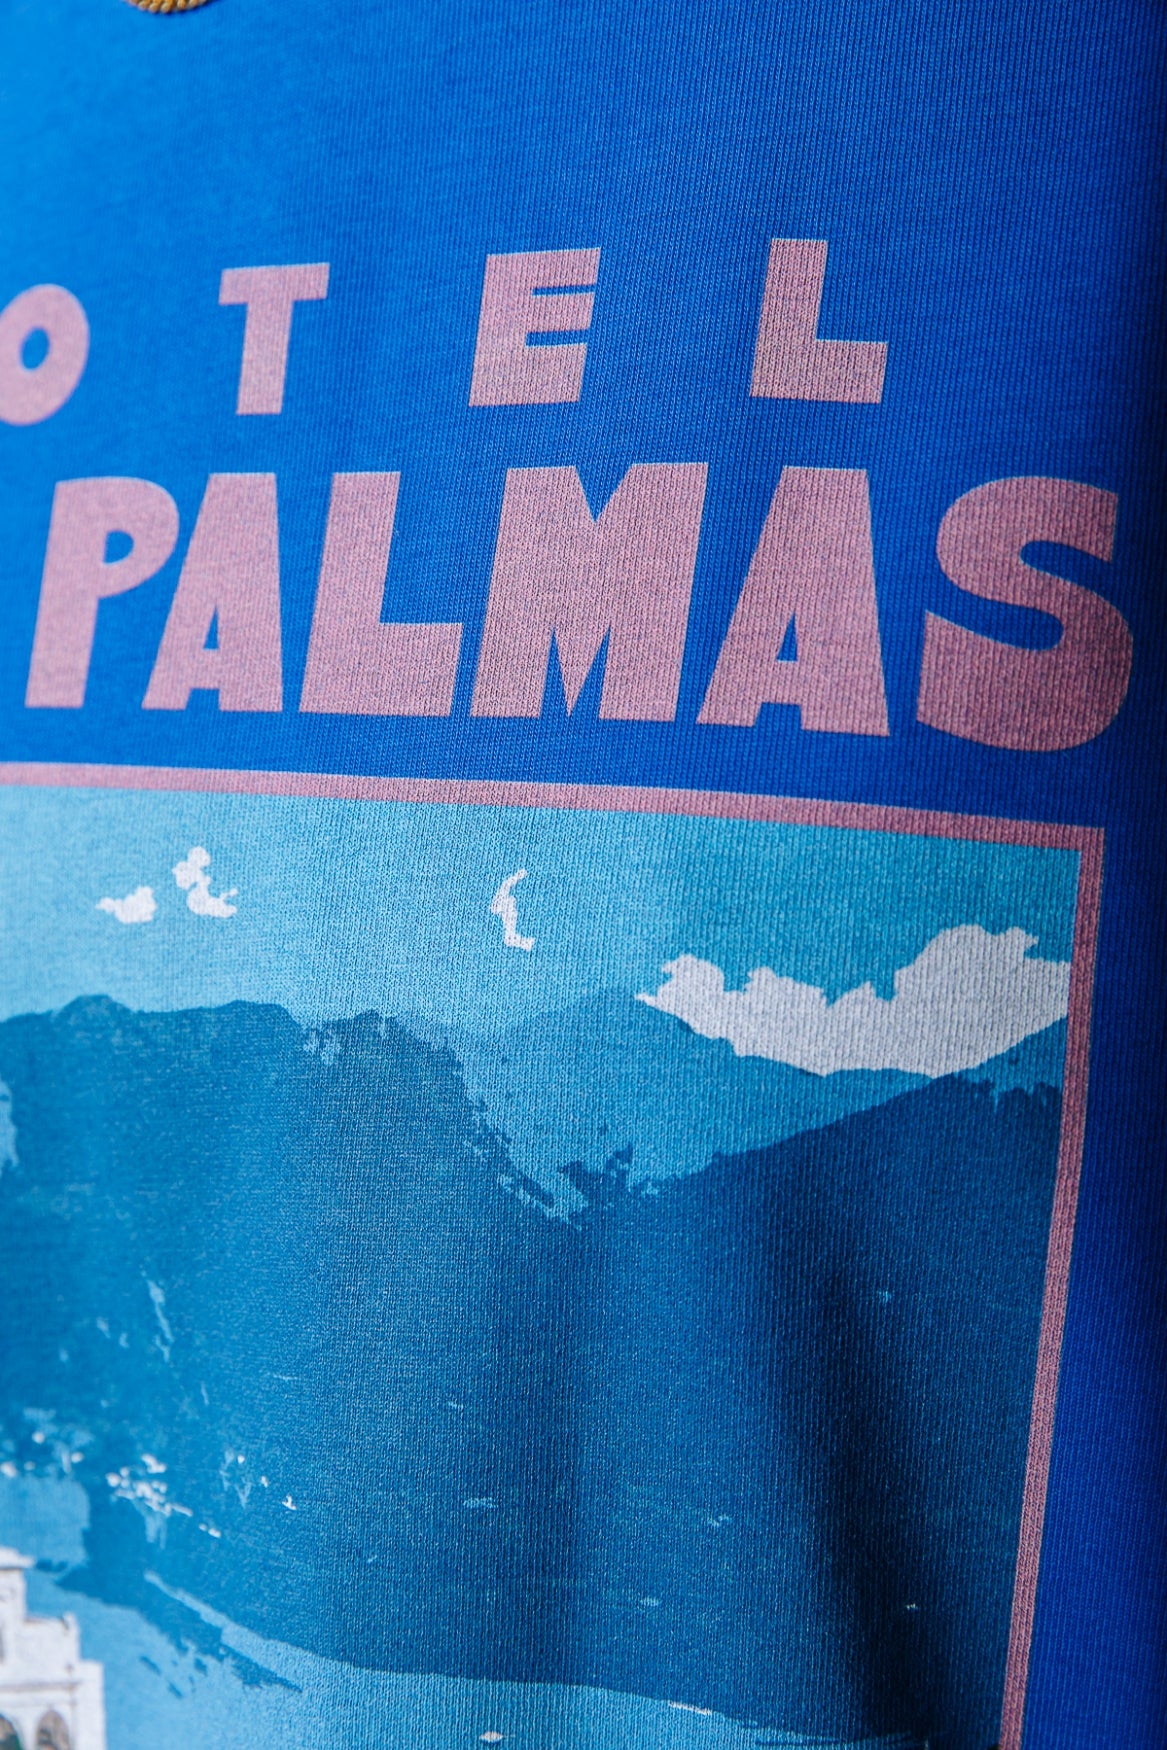 CR Las Palmas loose fit tee - blue